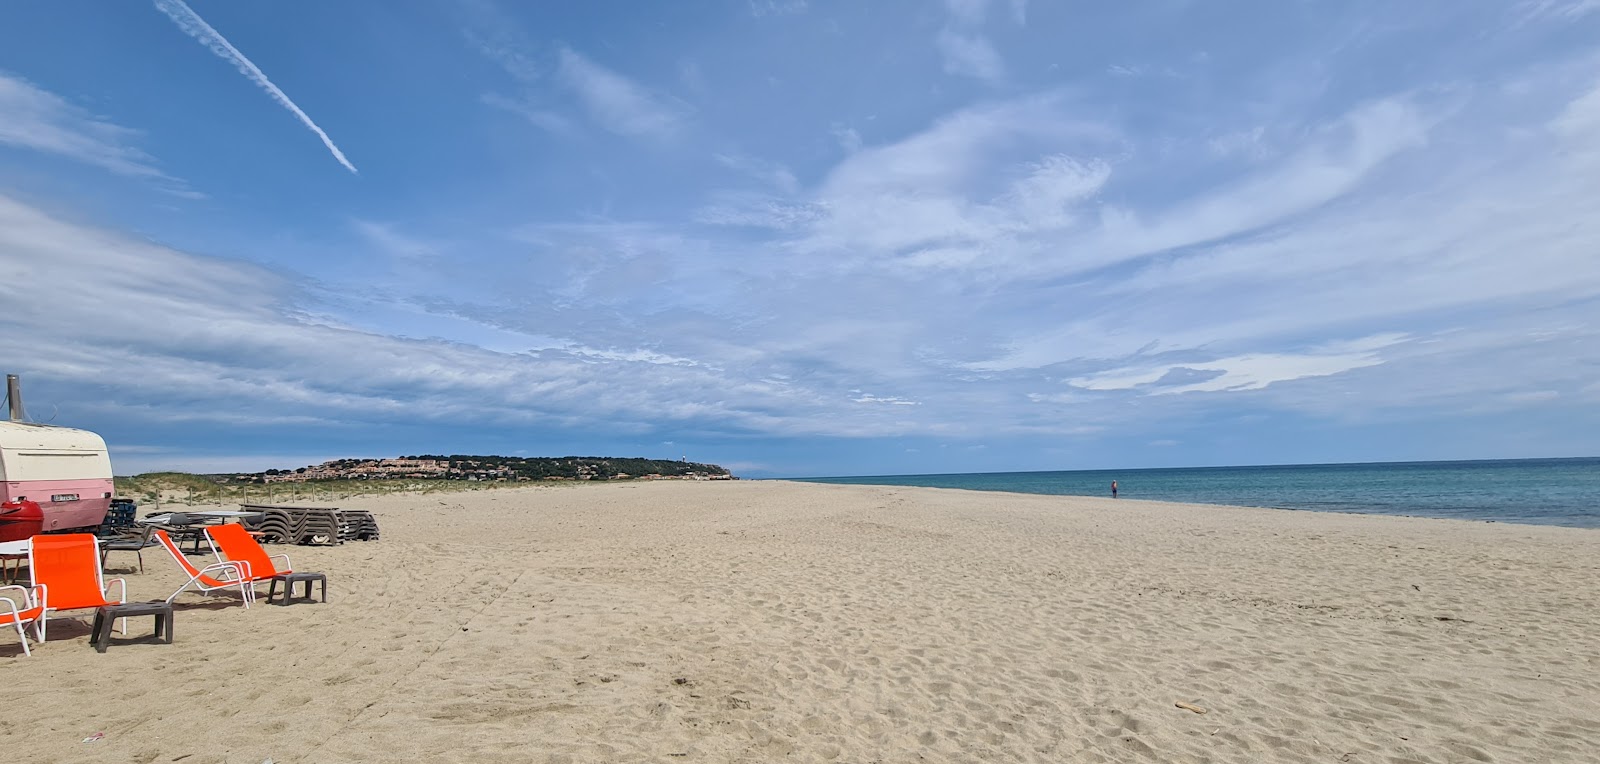 Foto av Leucate Beach med lång rak strand